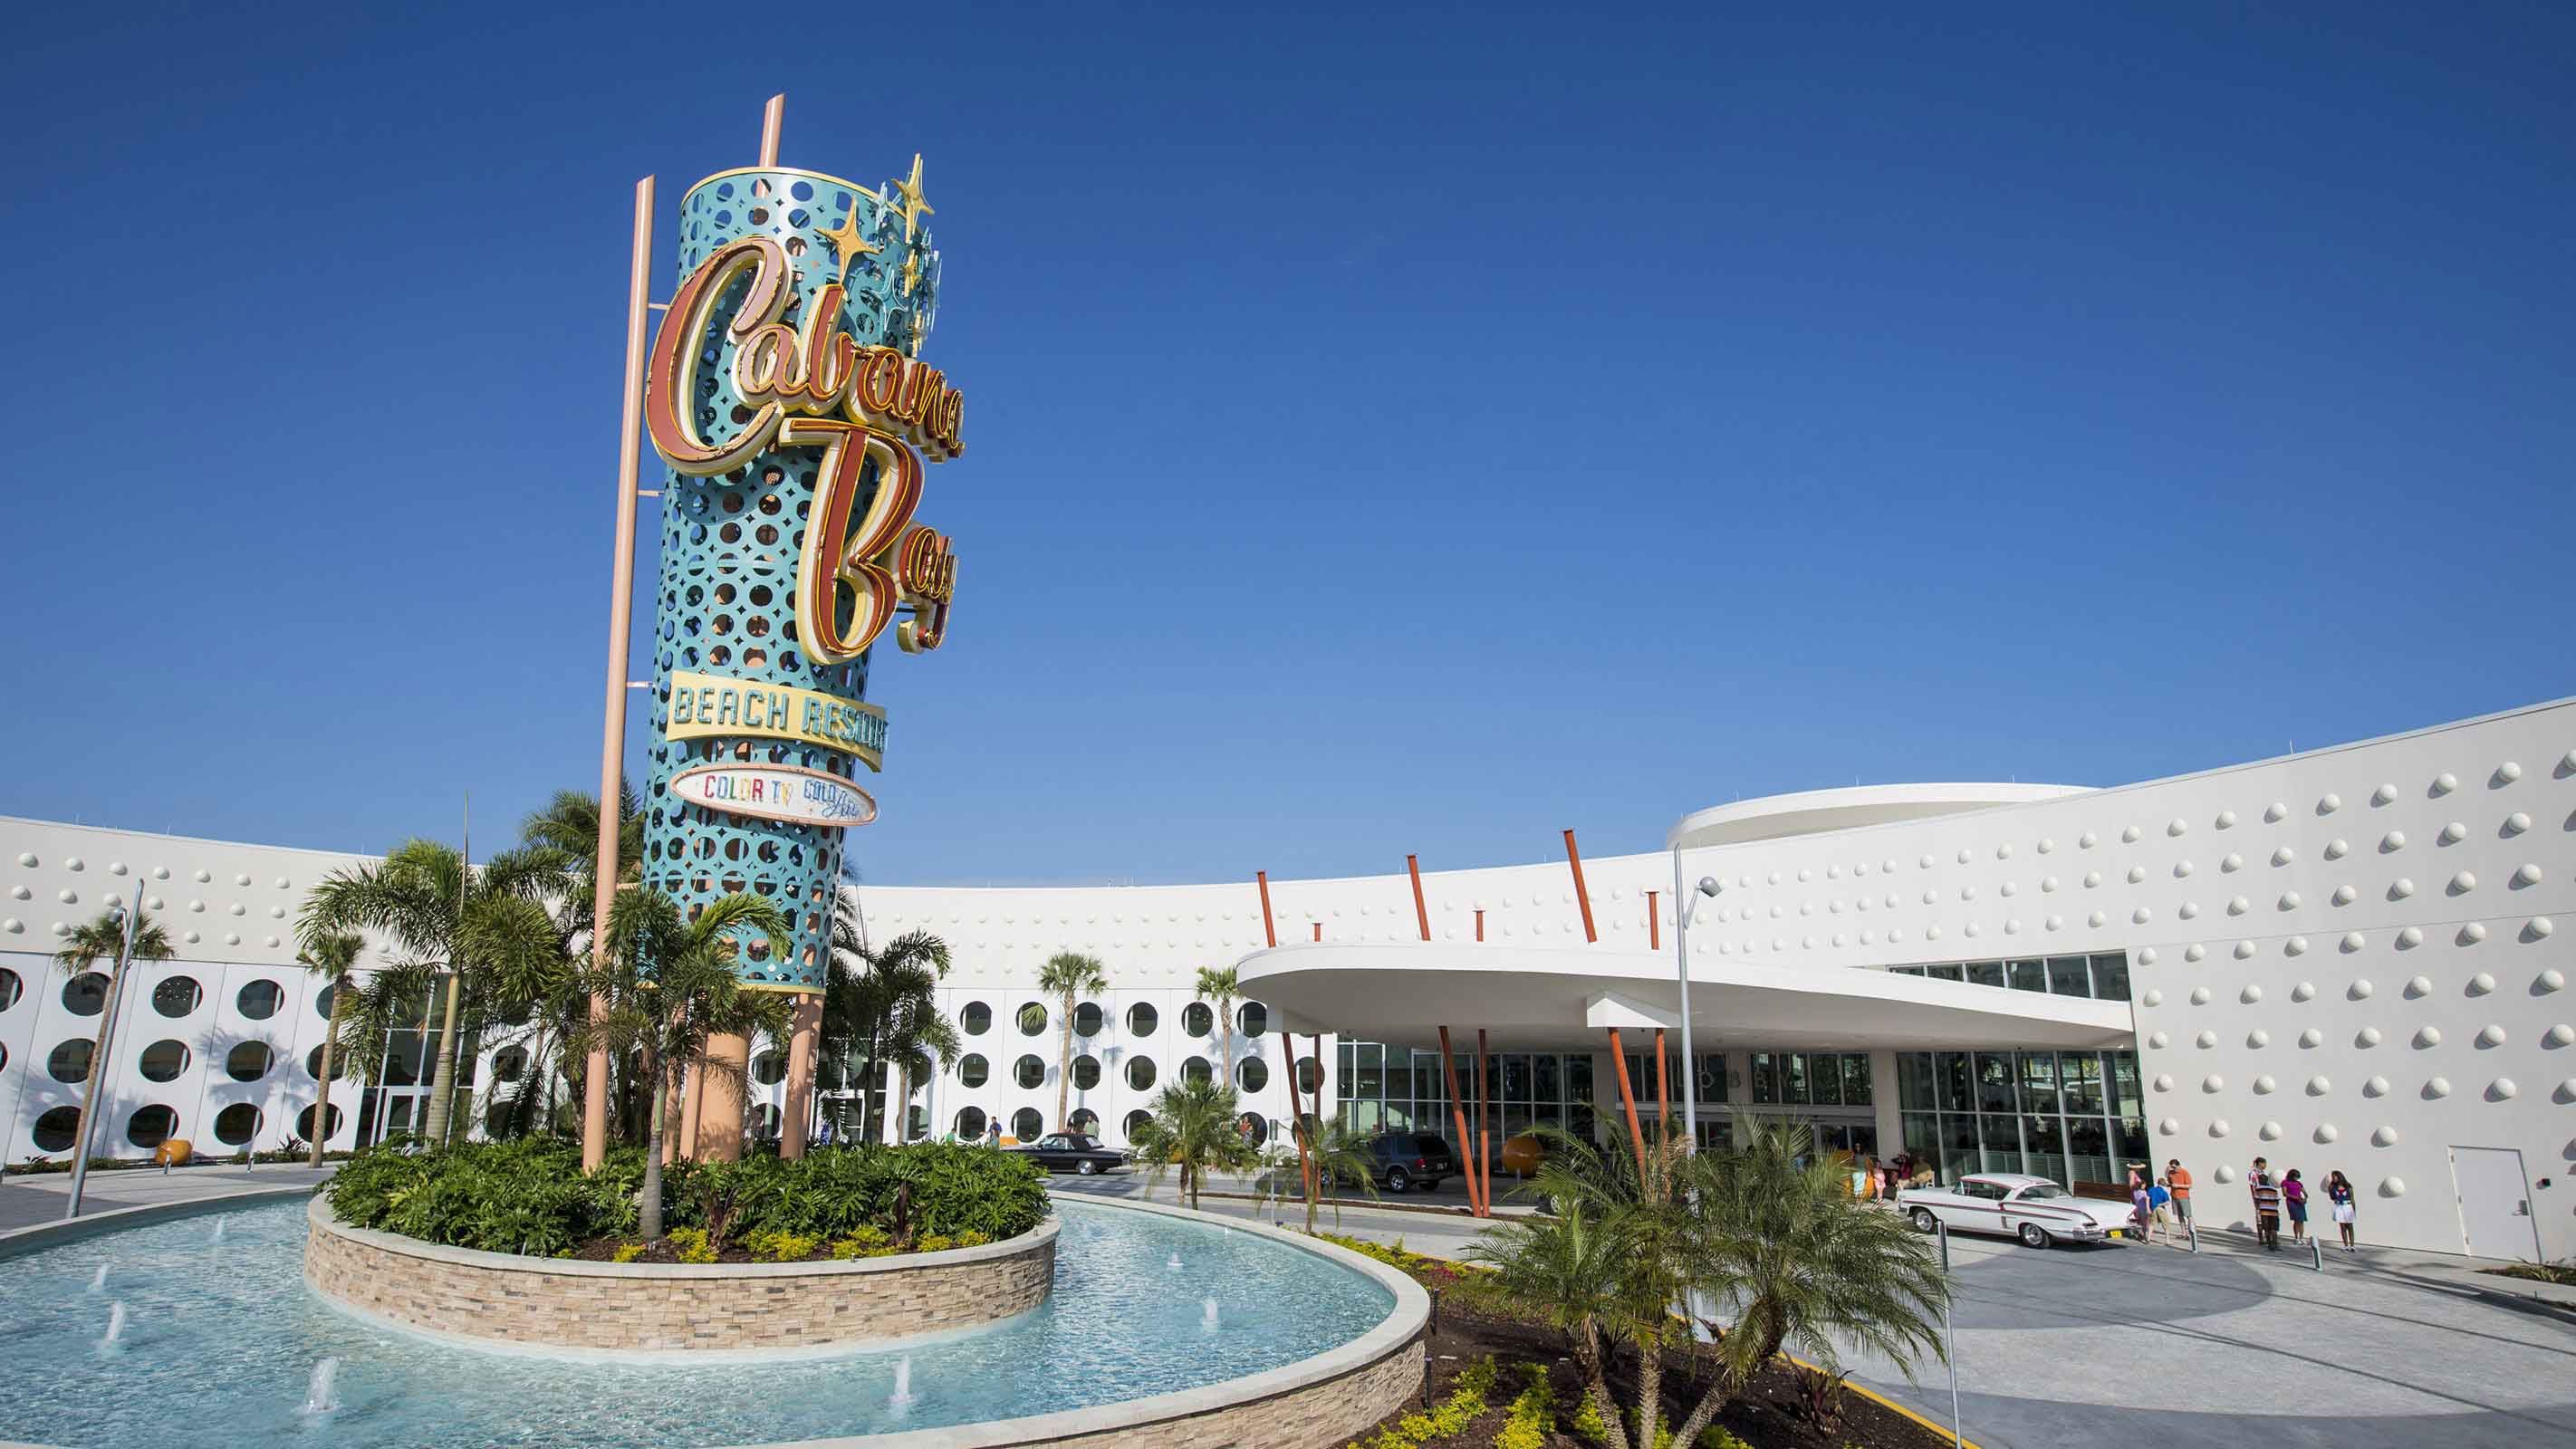 Universal Orlando’s fourth on-site hotel, Universal’s Cabana